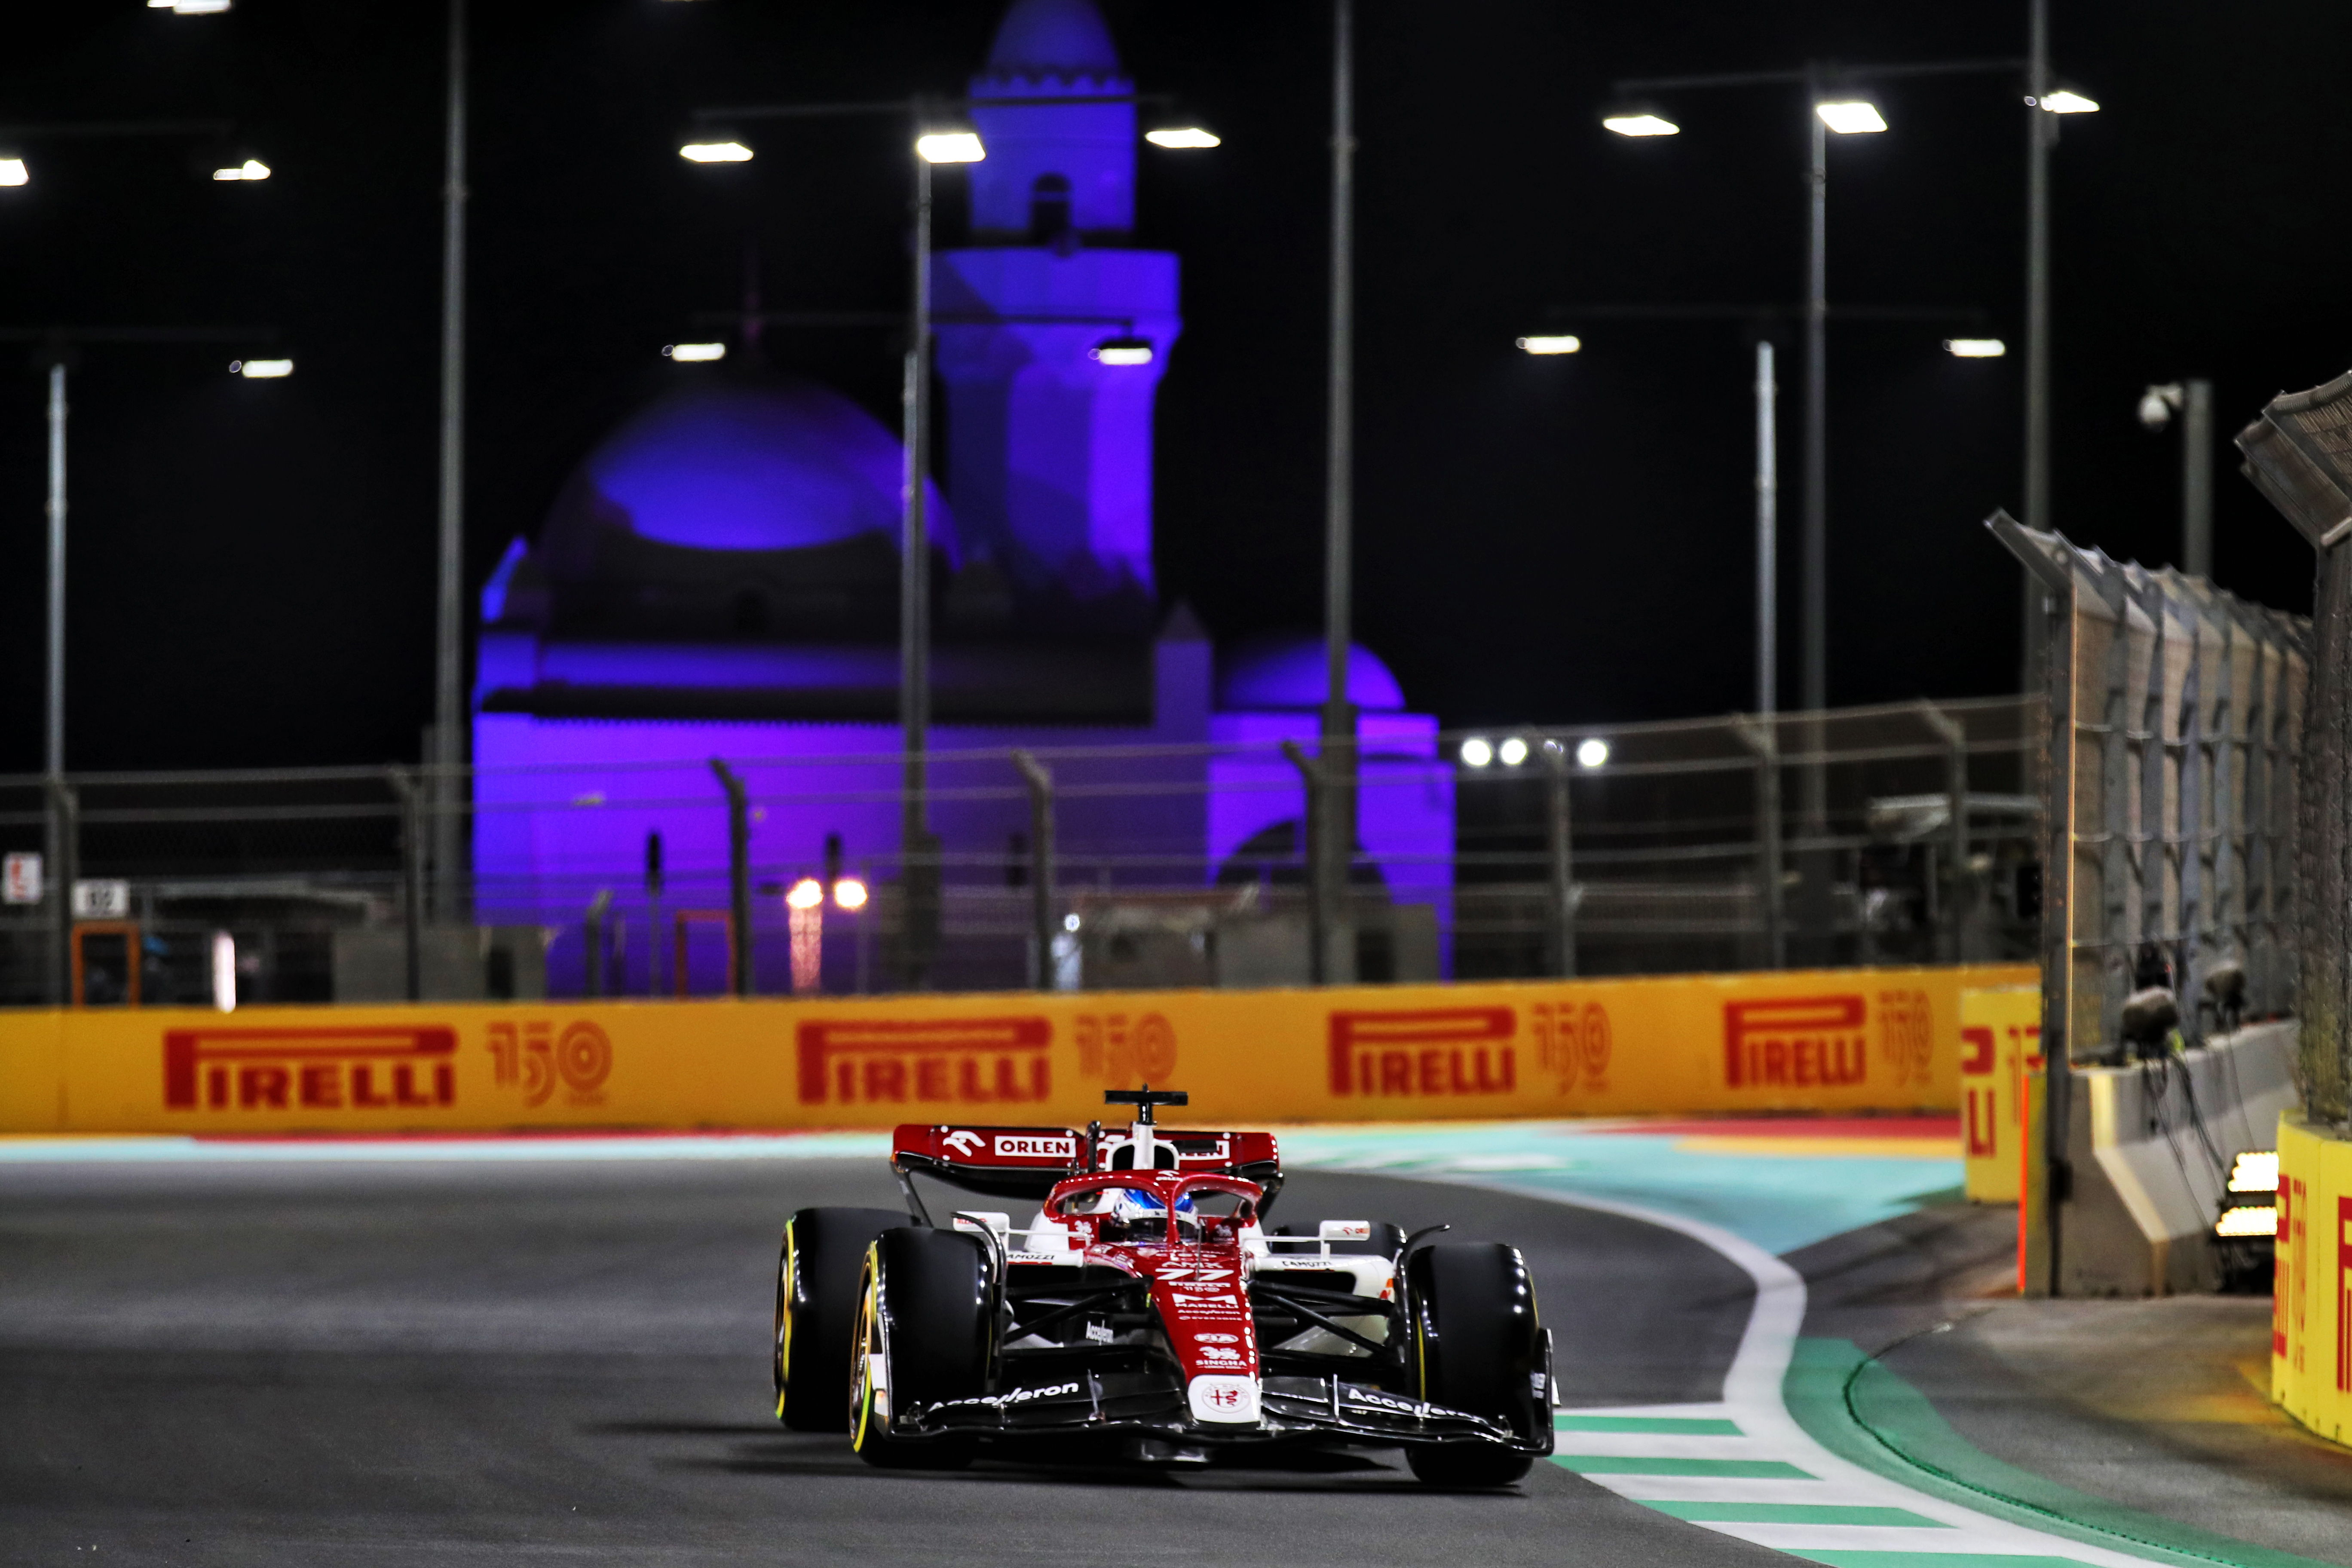 Motorsport Formula One World Championship Grand Prix d'Arabie Saoudite Journée d'entraînement Jeddah, Arabie Saoudite